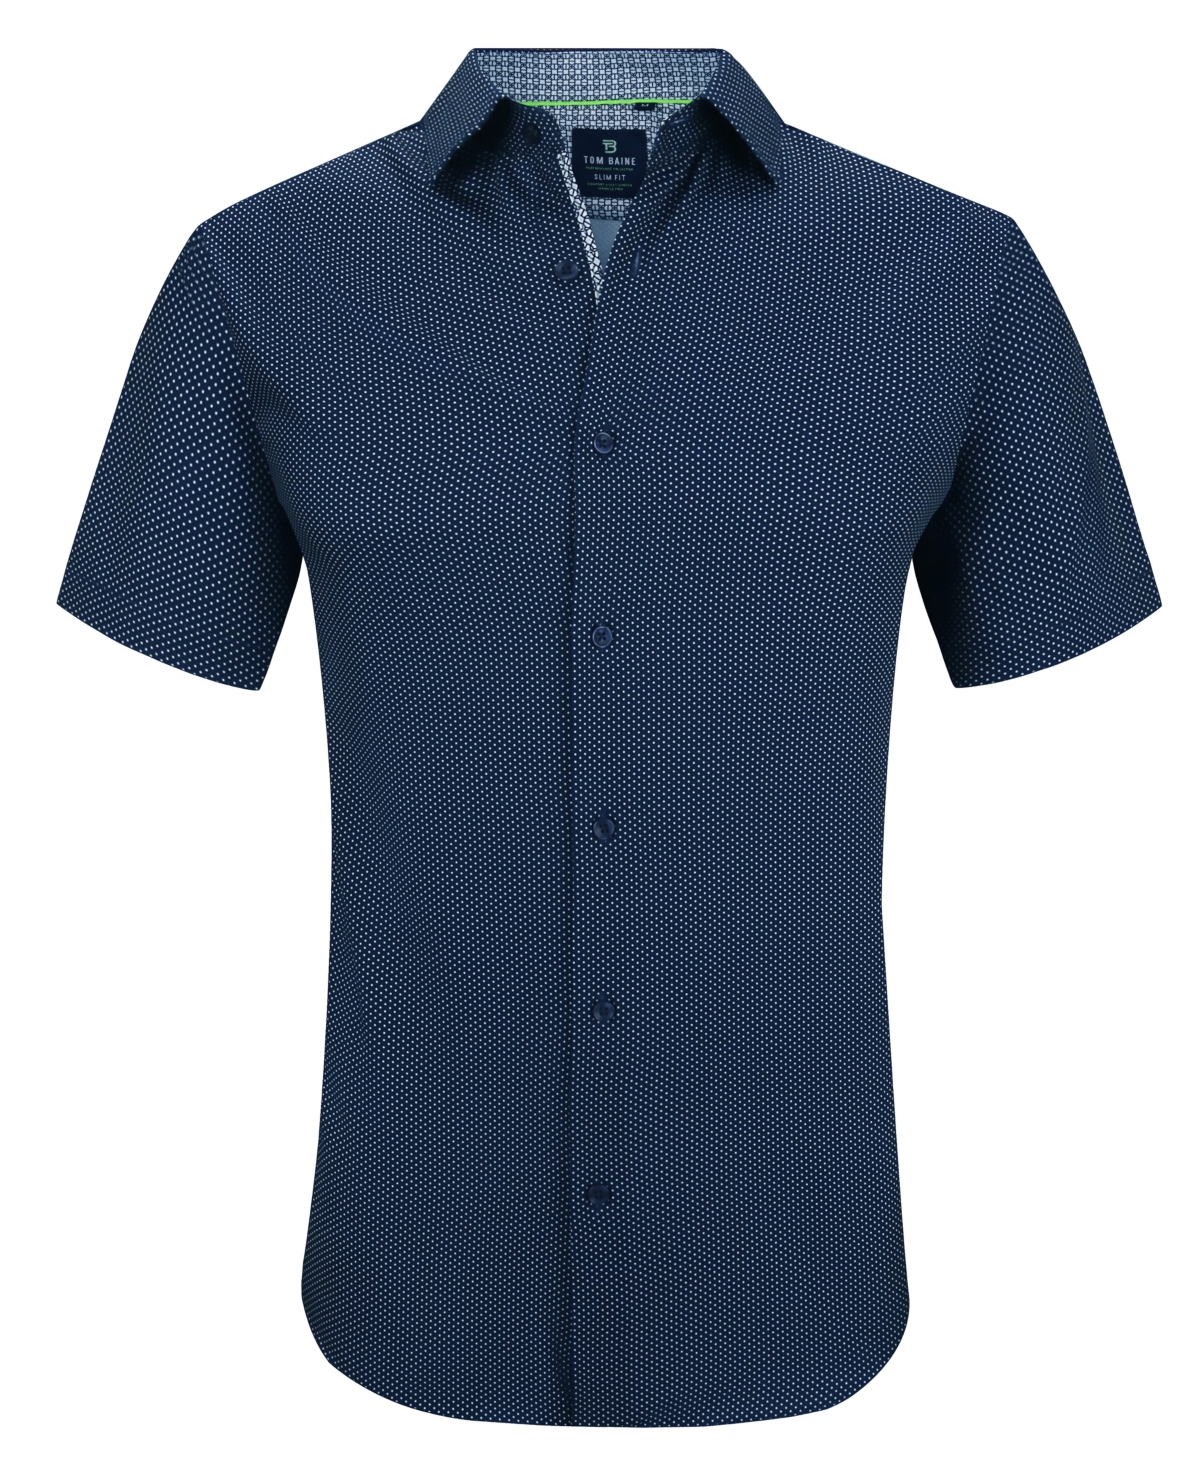 Tom Baine Men's Slim Fit Short Sleeve Performance Stretch Button Down Dress Shirt In Navy Dot